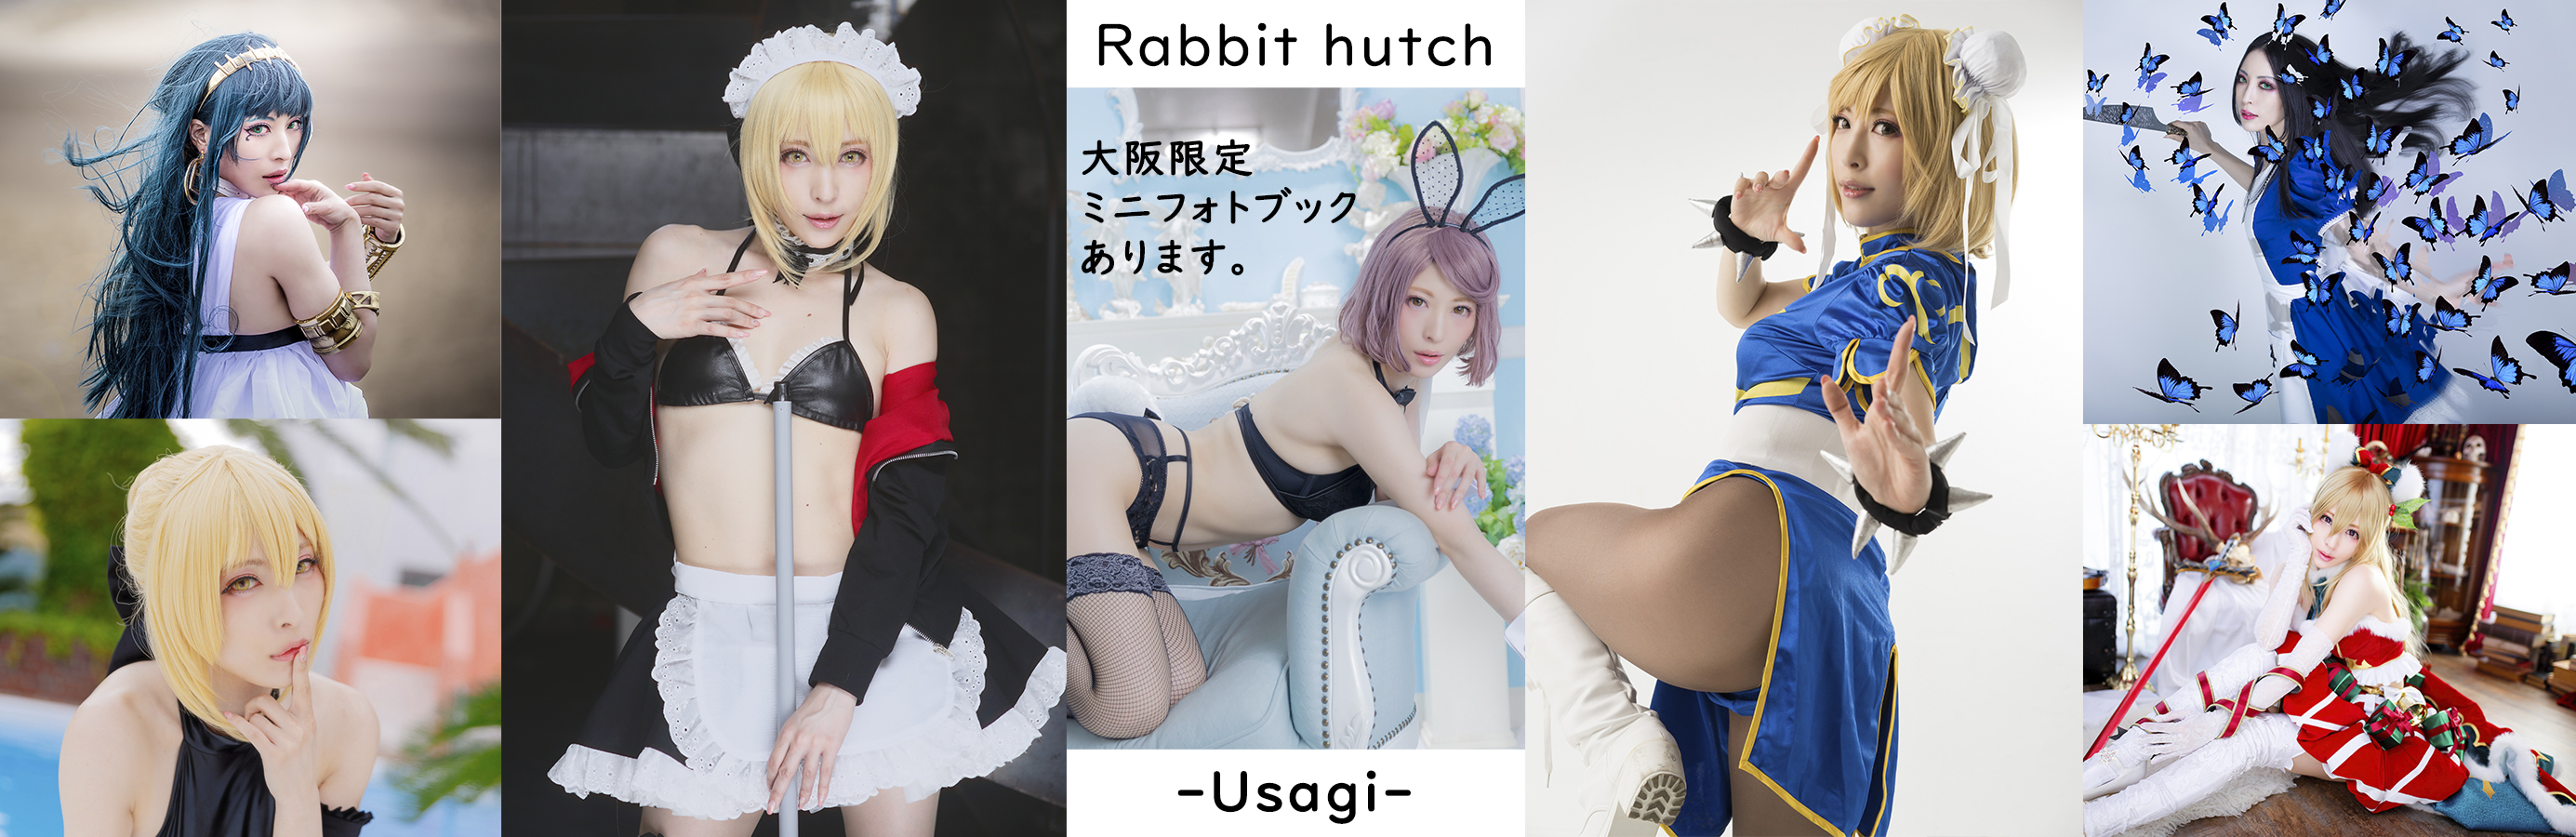 Rabbit@hutch